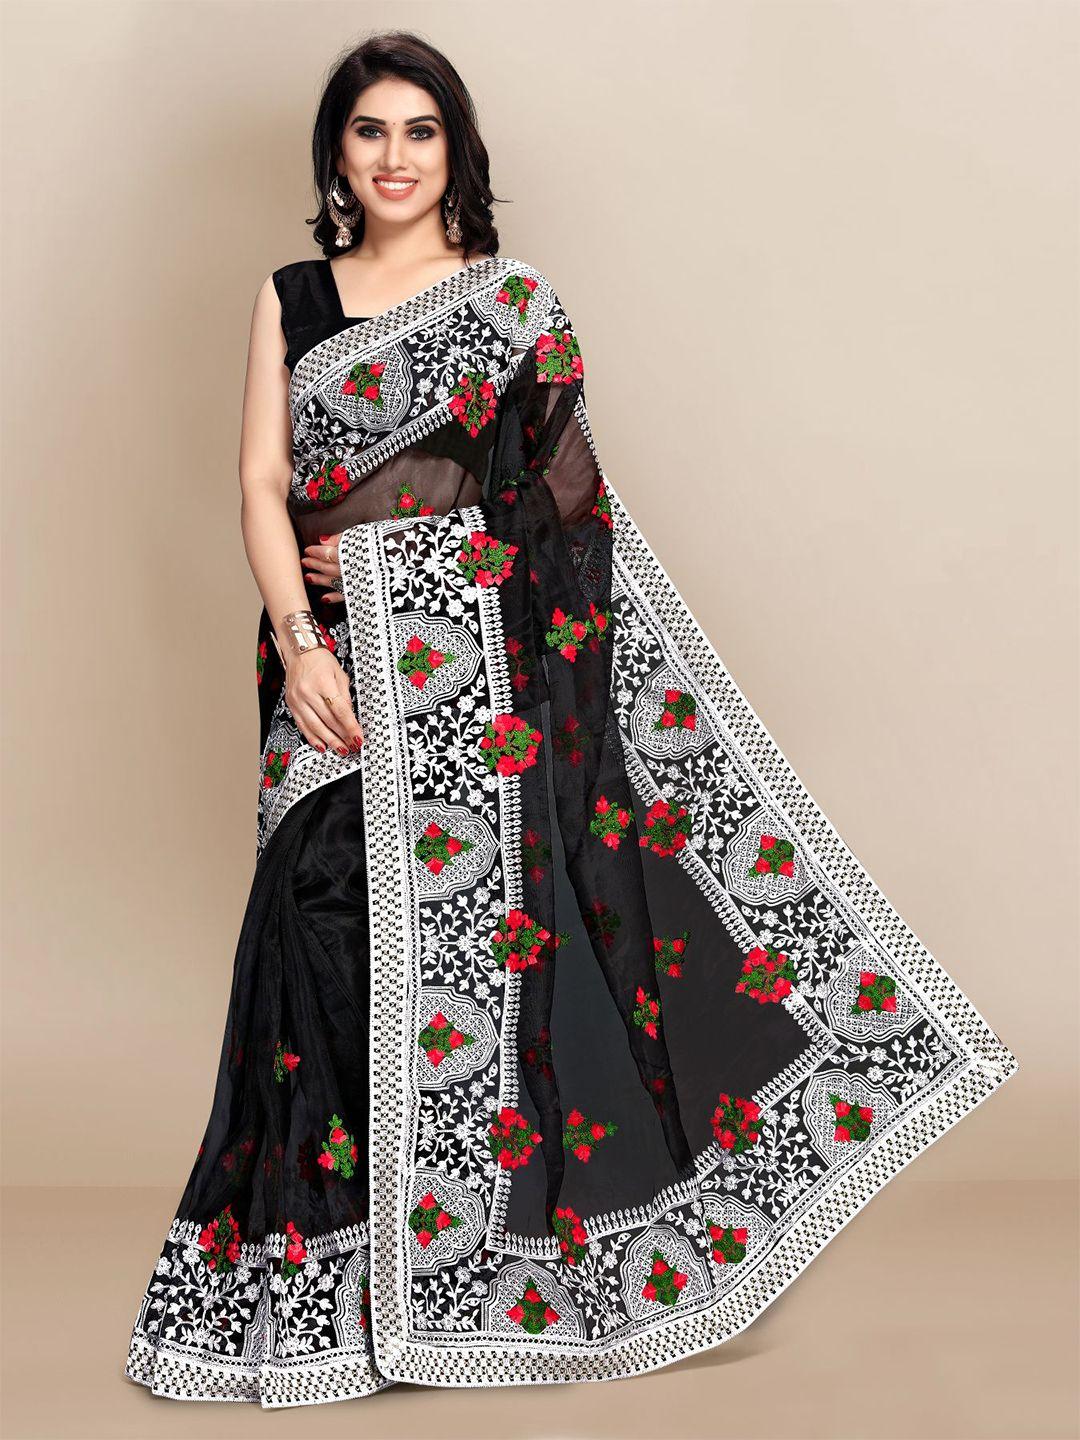 vairagee floral embroidered saree